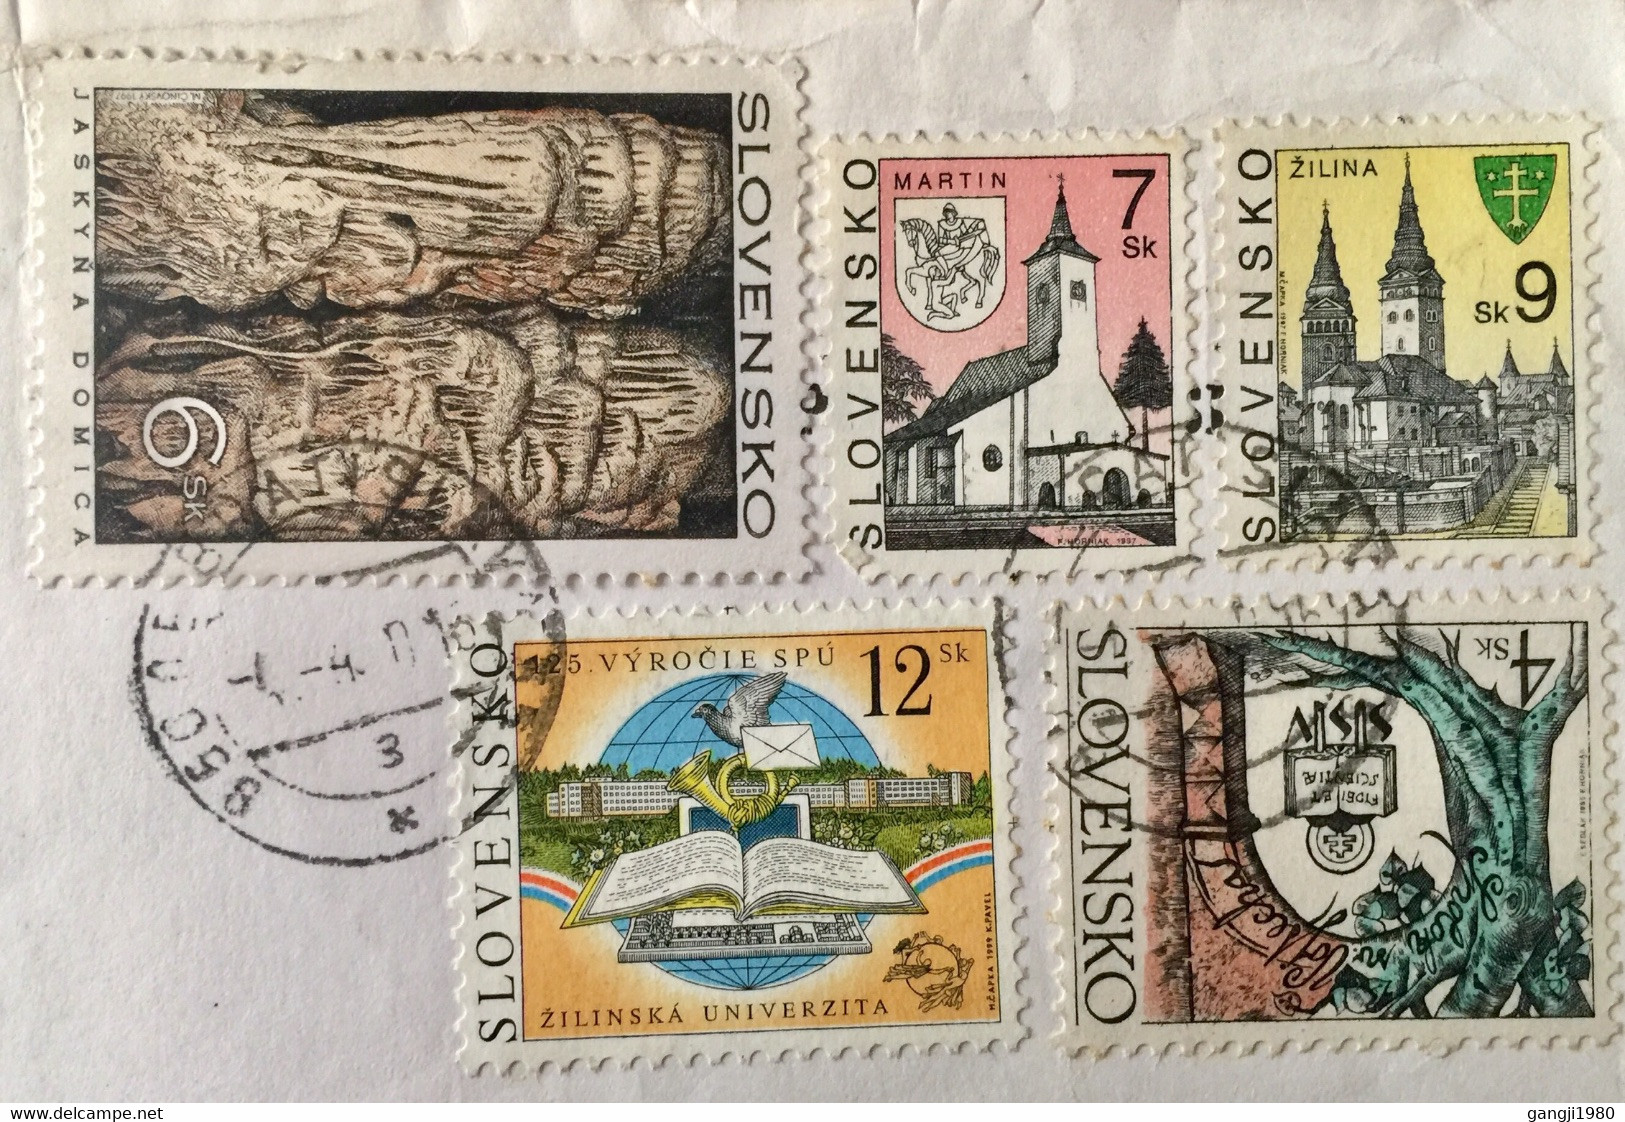 SLOVAKIA 2000, REGISTERED AIRMAIL COVER TO INDIA,5 STAMPS ,MARTIN ZILINA ,ZILINSKA UNIVERSITY JASKYNA DOMICA ,TREE - Storia Postale